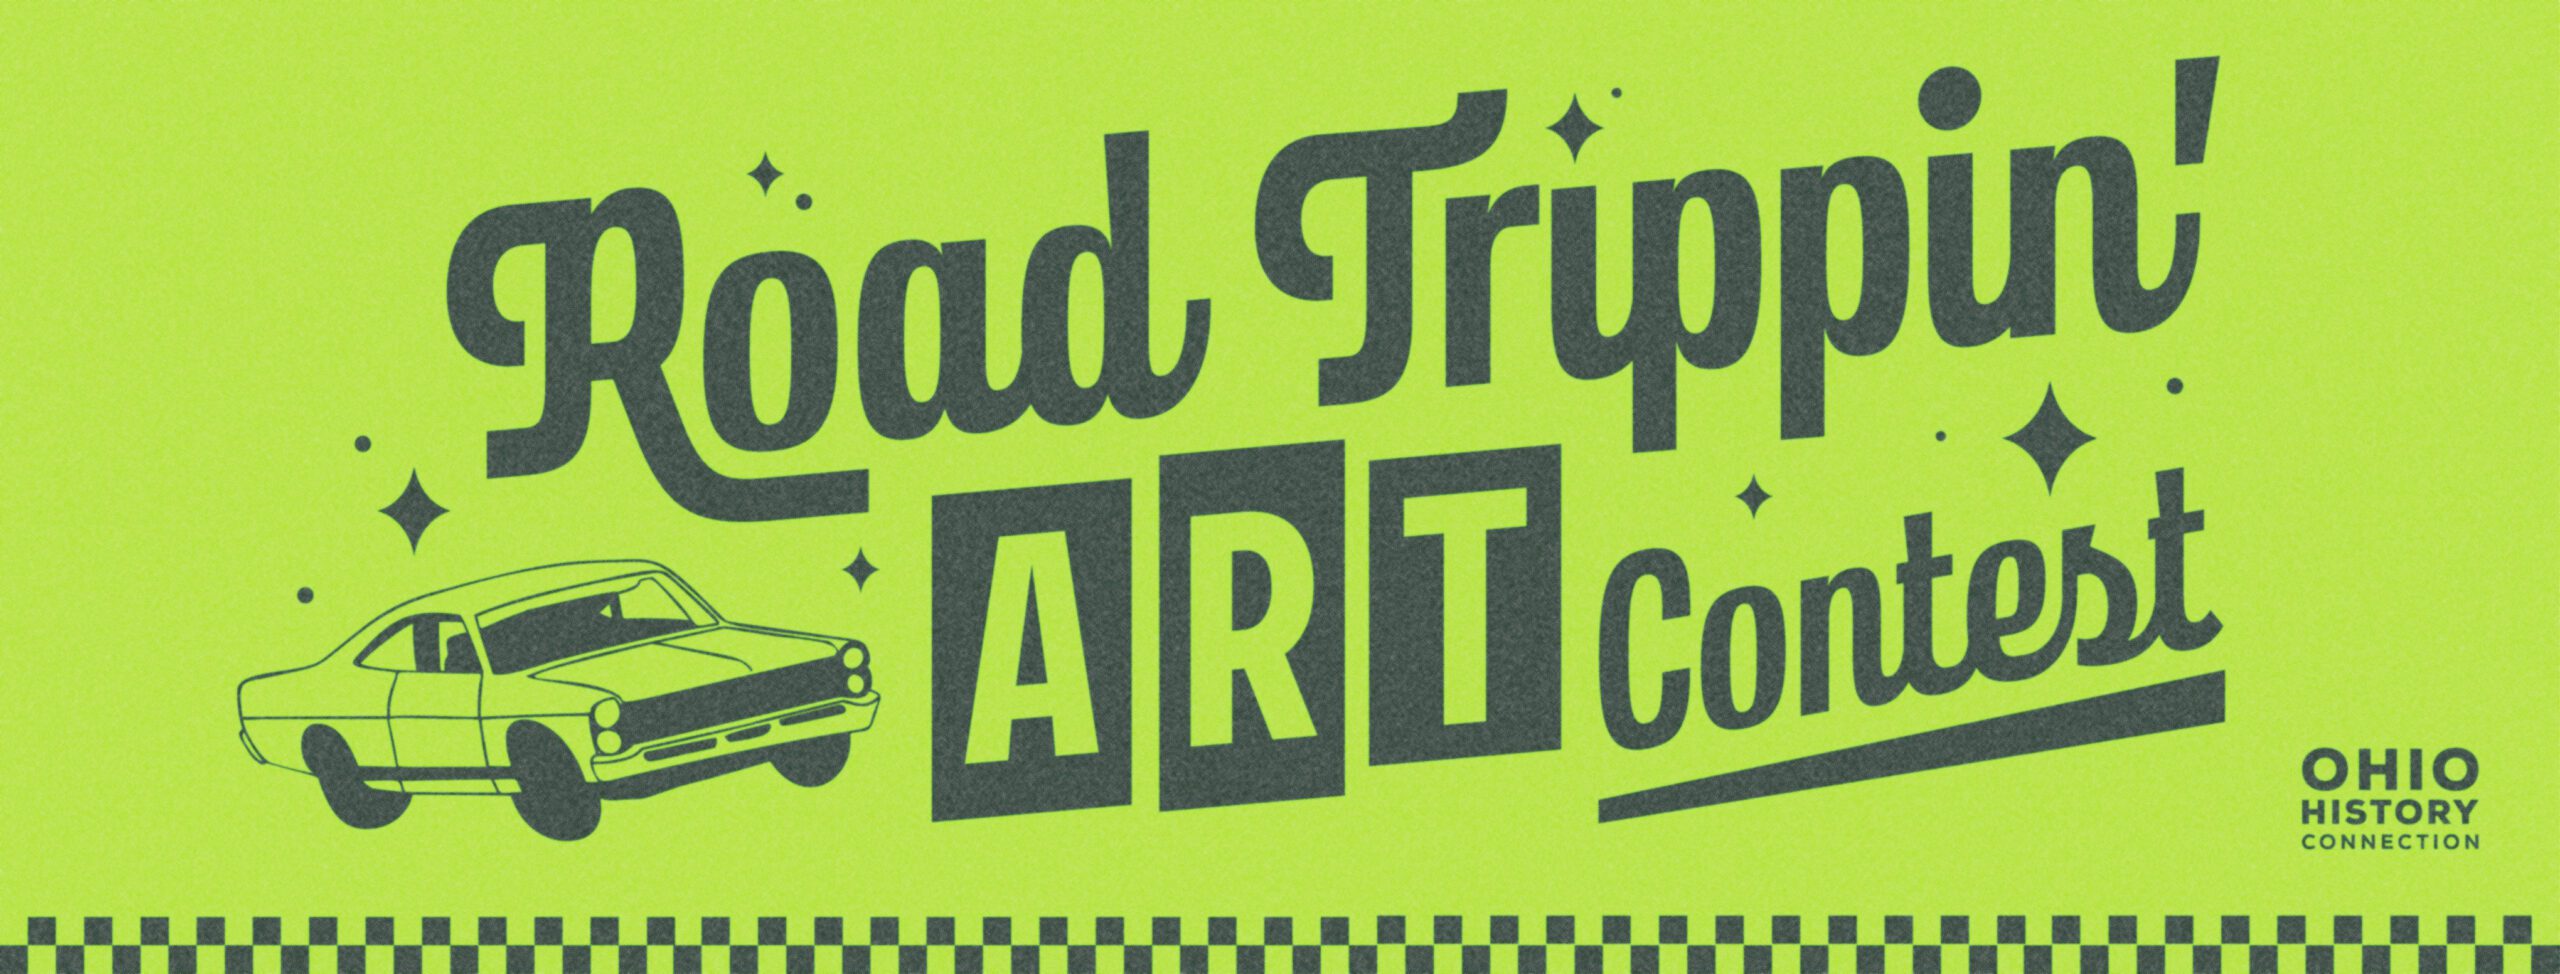 Road Trippin' Art Contest